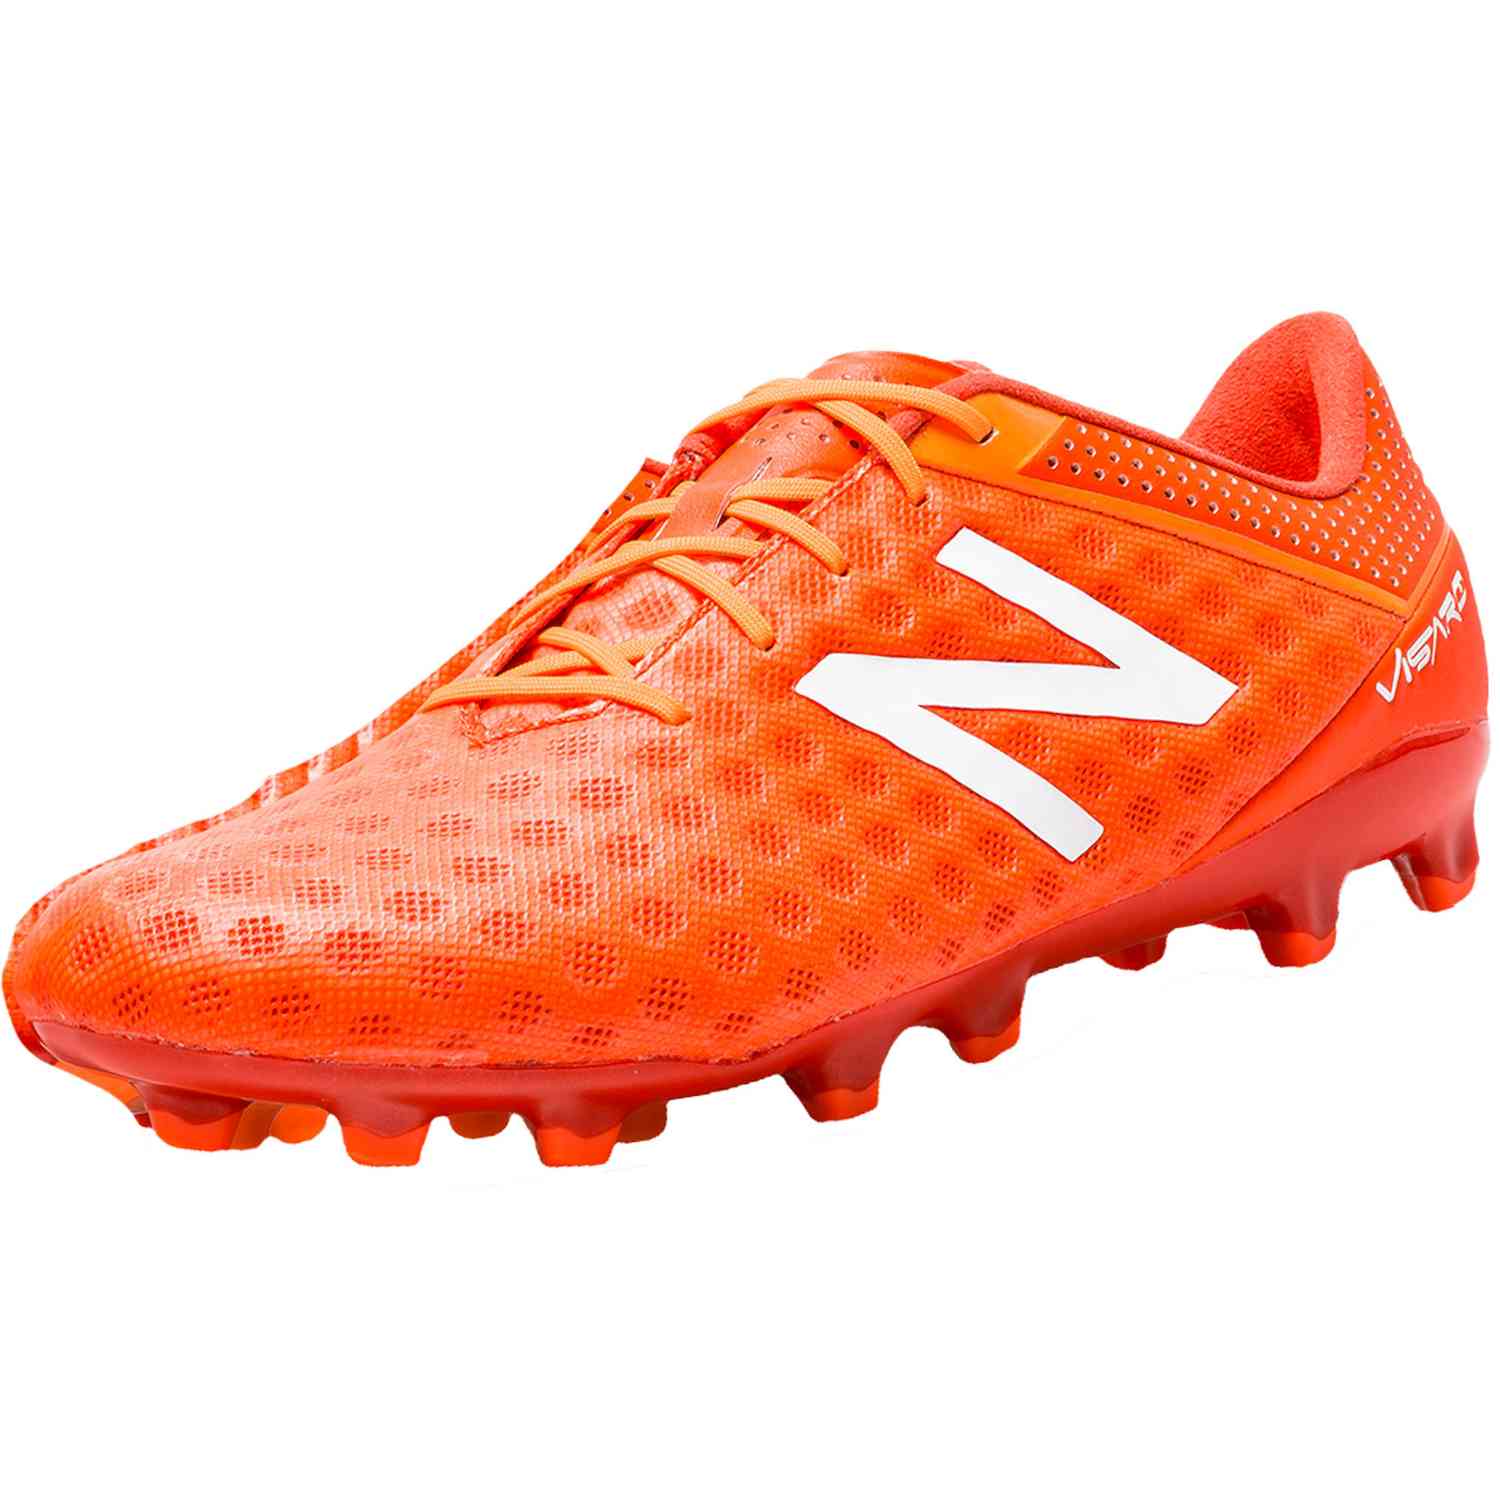 New Balance Visaro FG Cleats - Orange NB Soccer Shoes